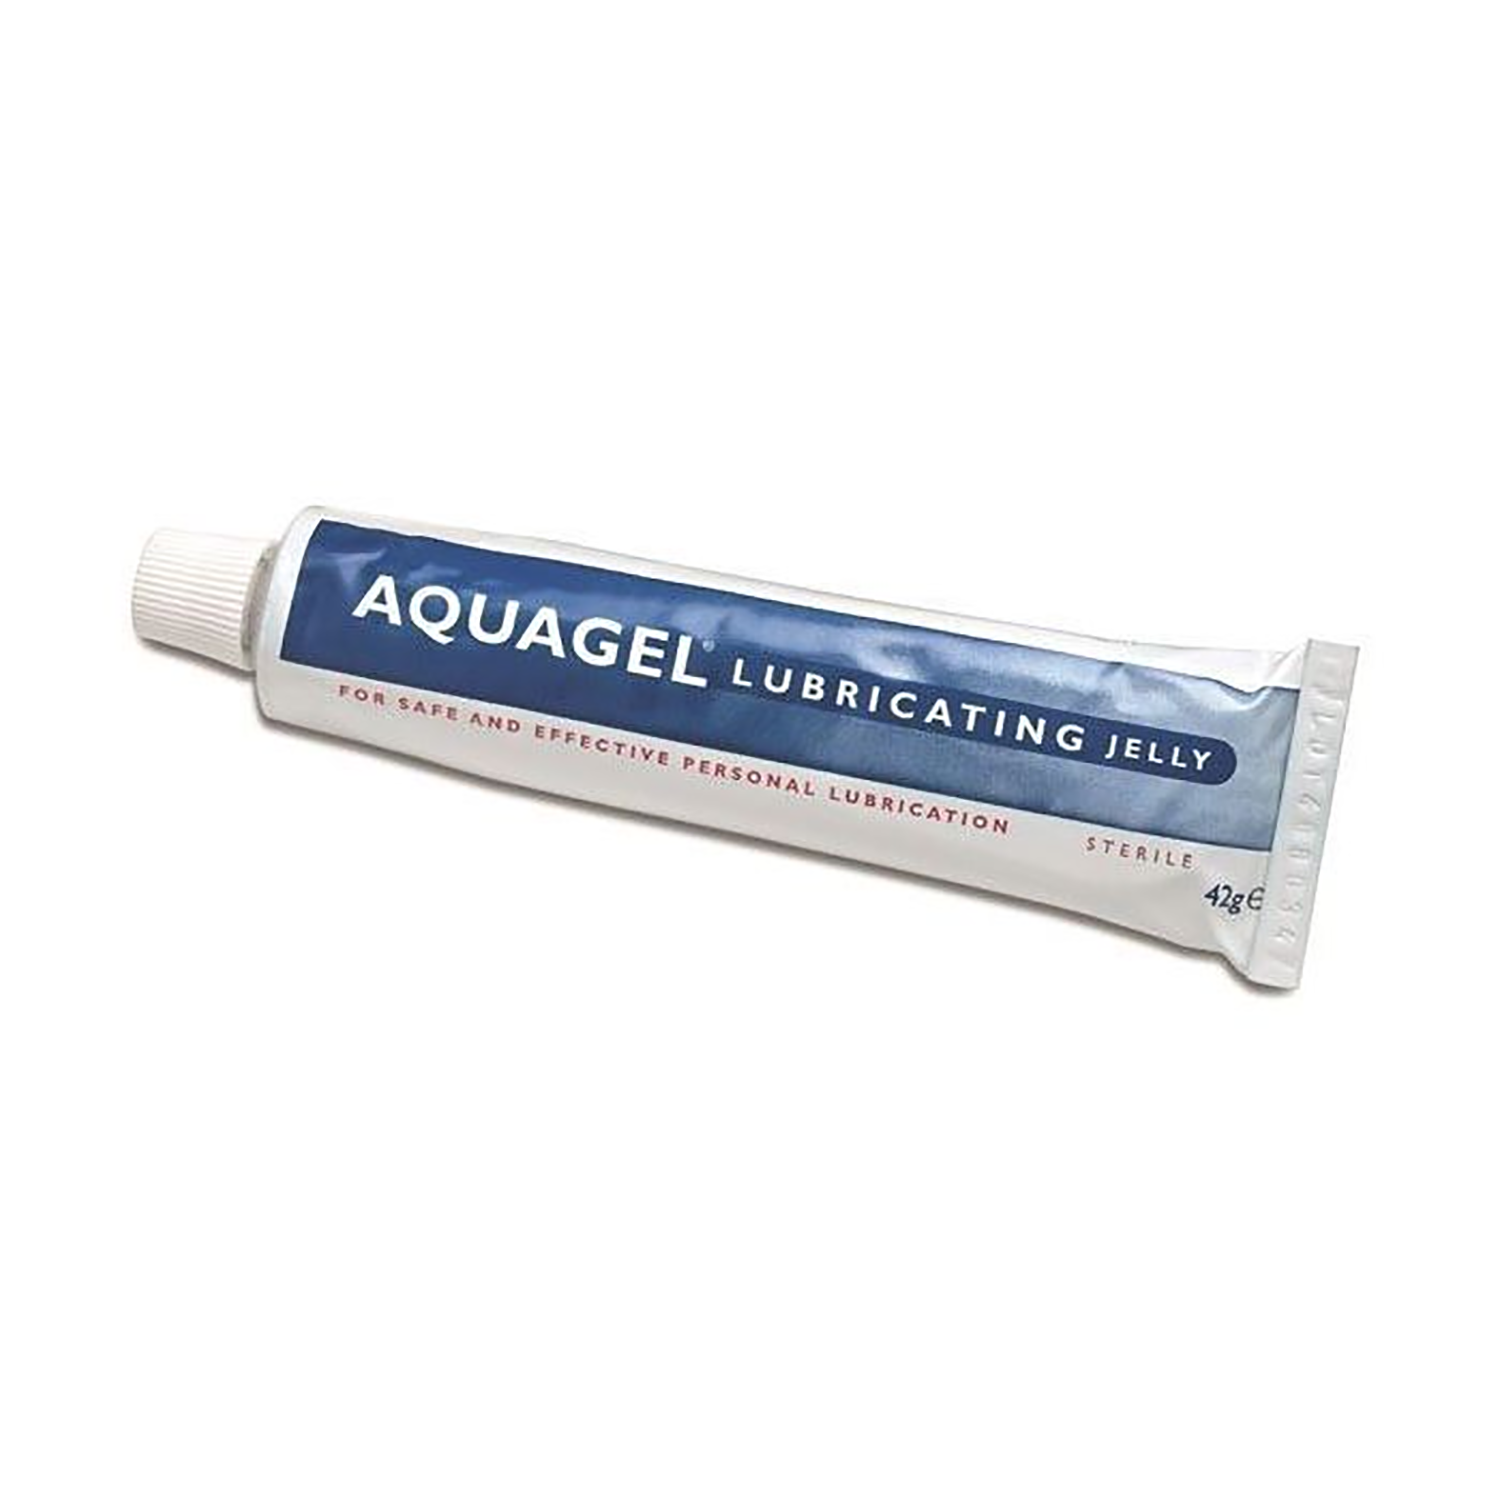 Aquagel Lubricating Jelly | Sterile | 42g | Single (1)